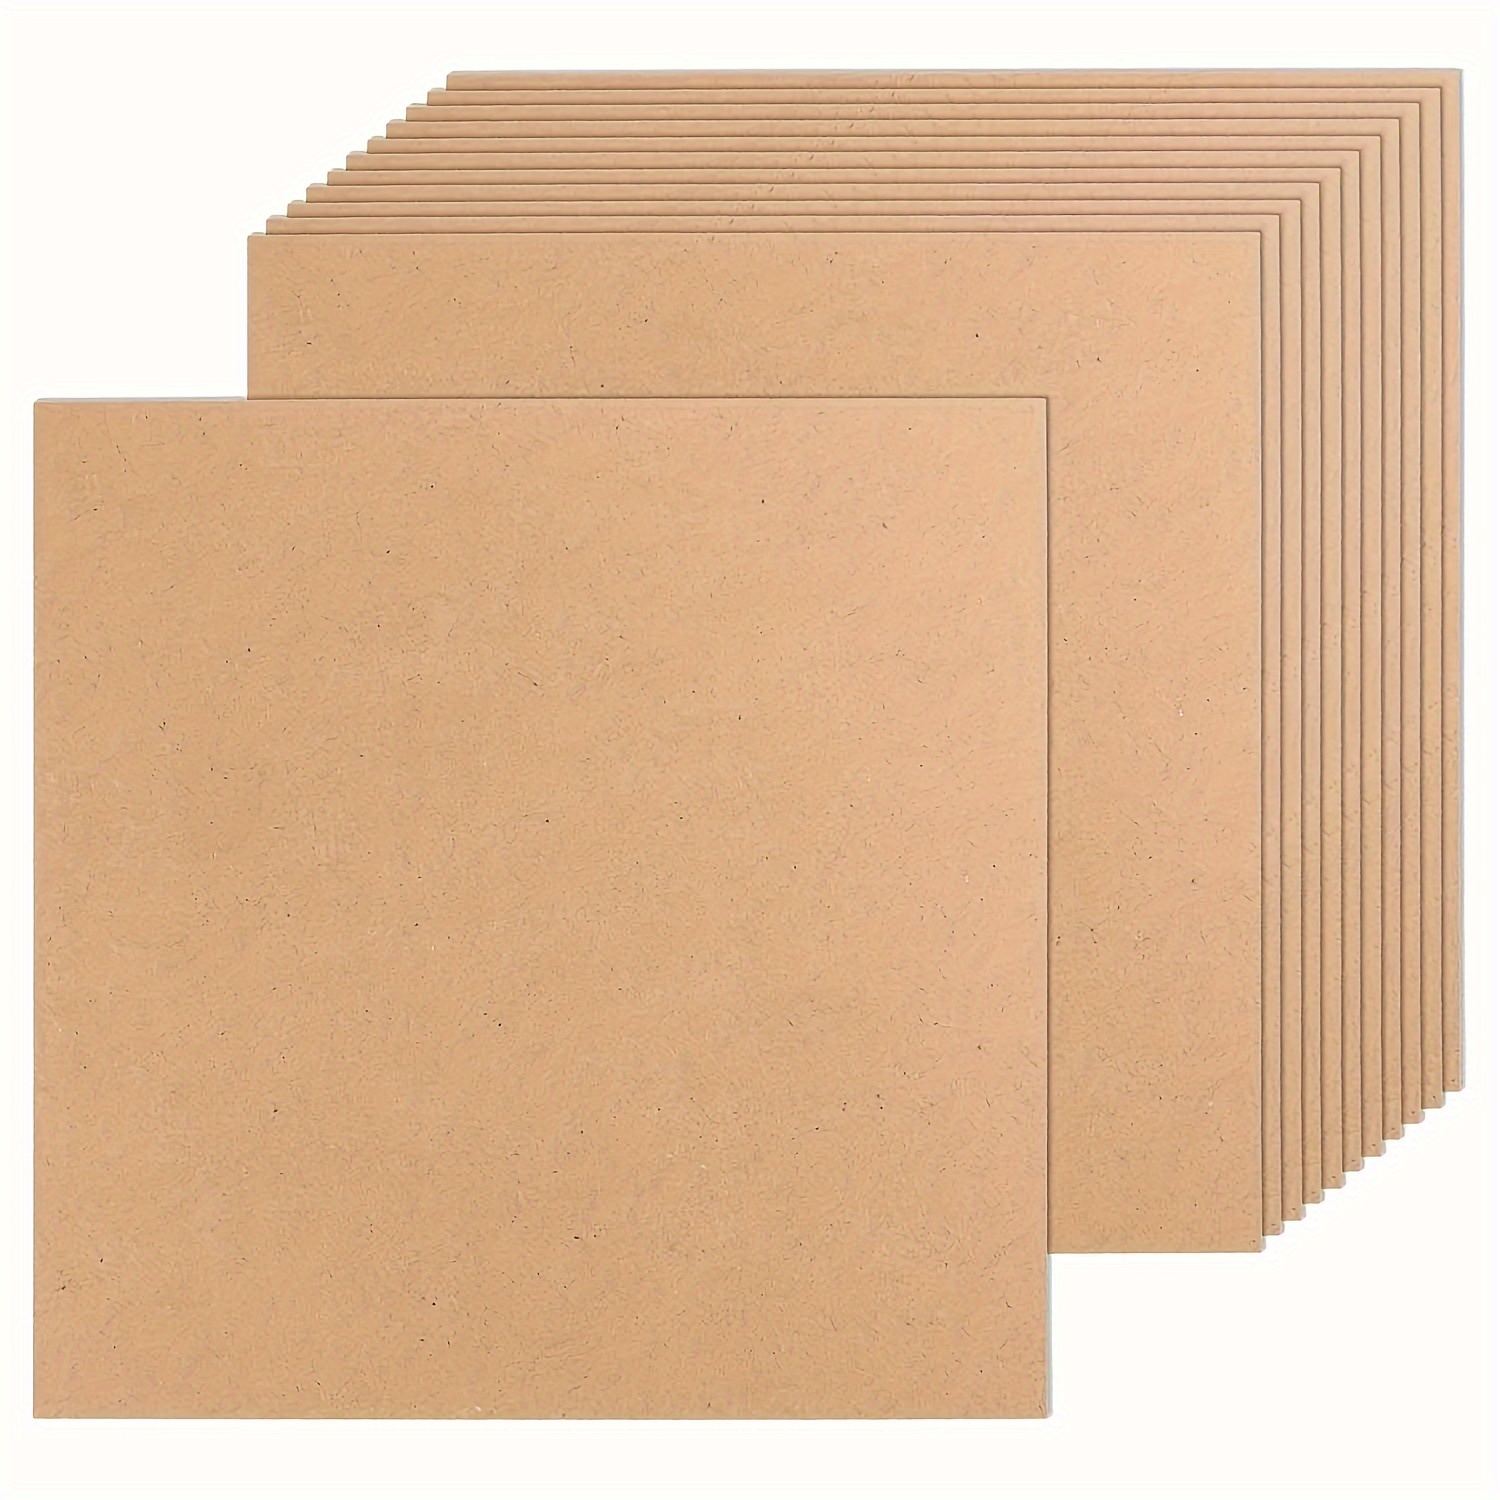 10 Pcs 3 mm 1/8 x 12 x 20 Inch MDF Wood Board Medium Density Fiberboard  Panels Cardboard Sheets for Arts Crafts, School DIY Projects, Drawing